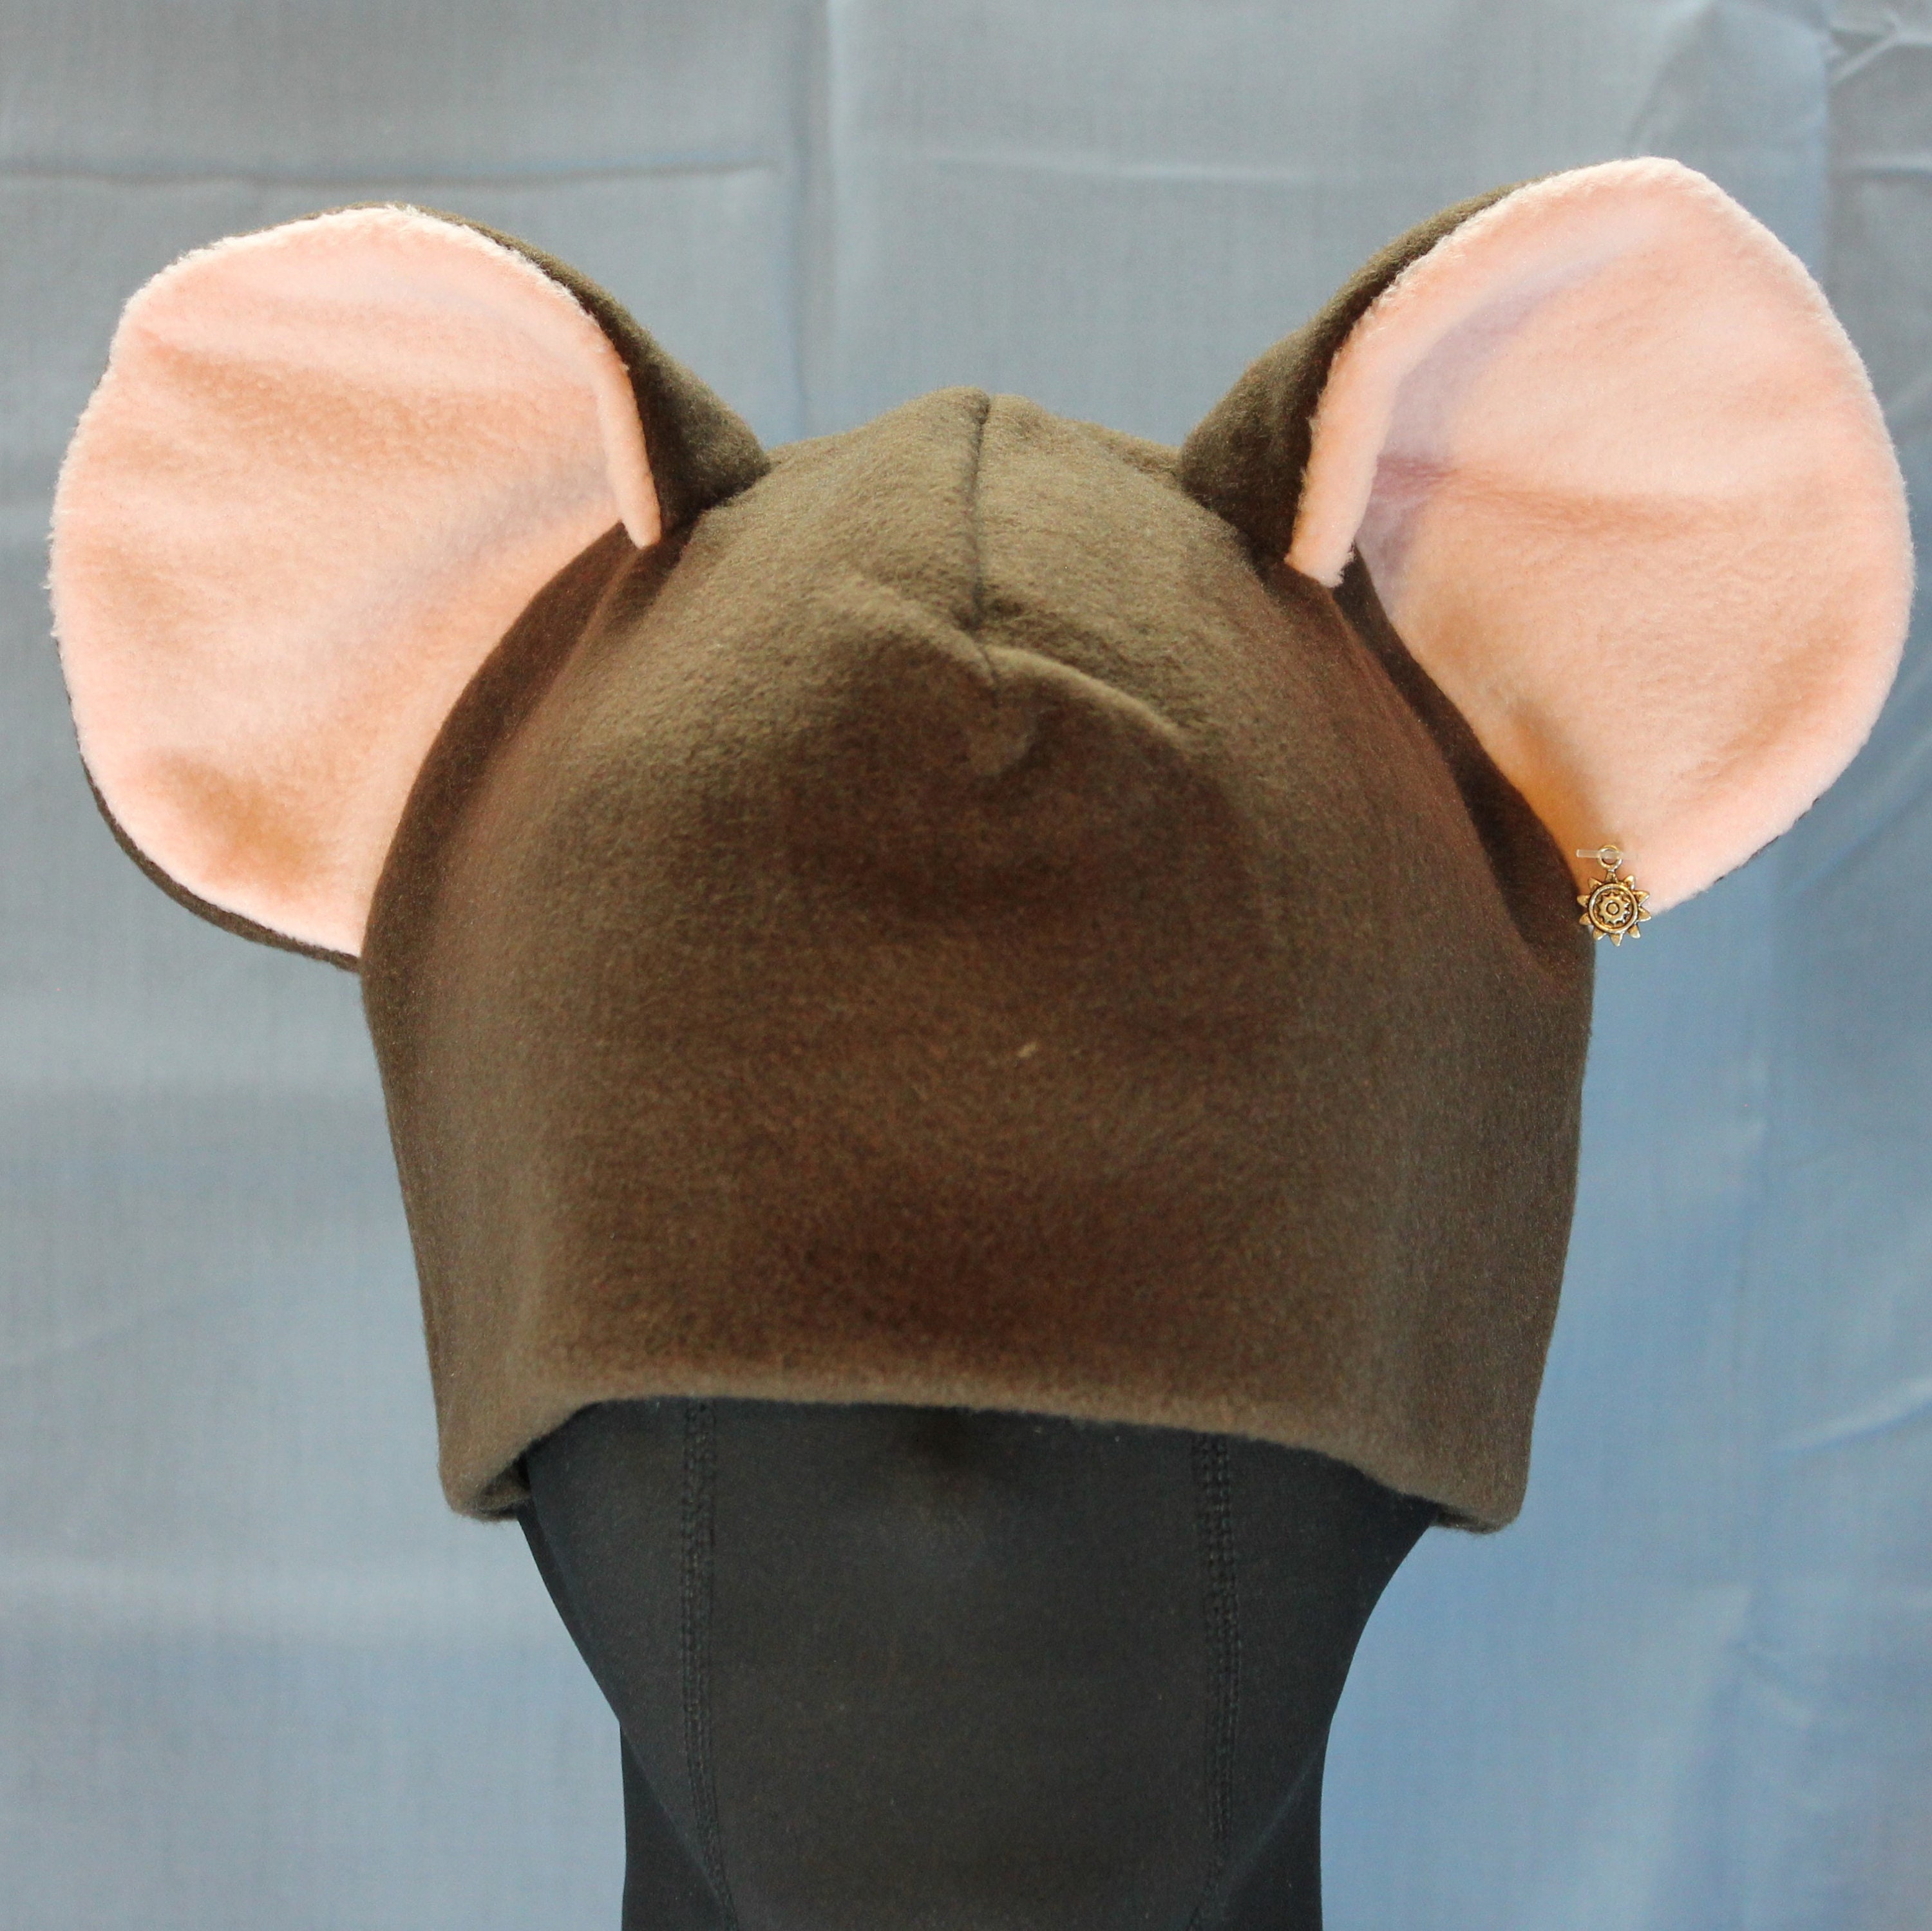 Monogram Mouse Ear Chocolate Brown Mouse Ear Designer Ears 